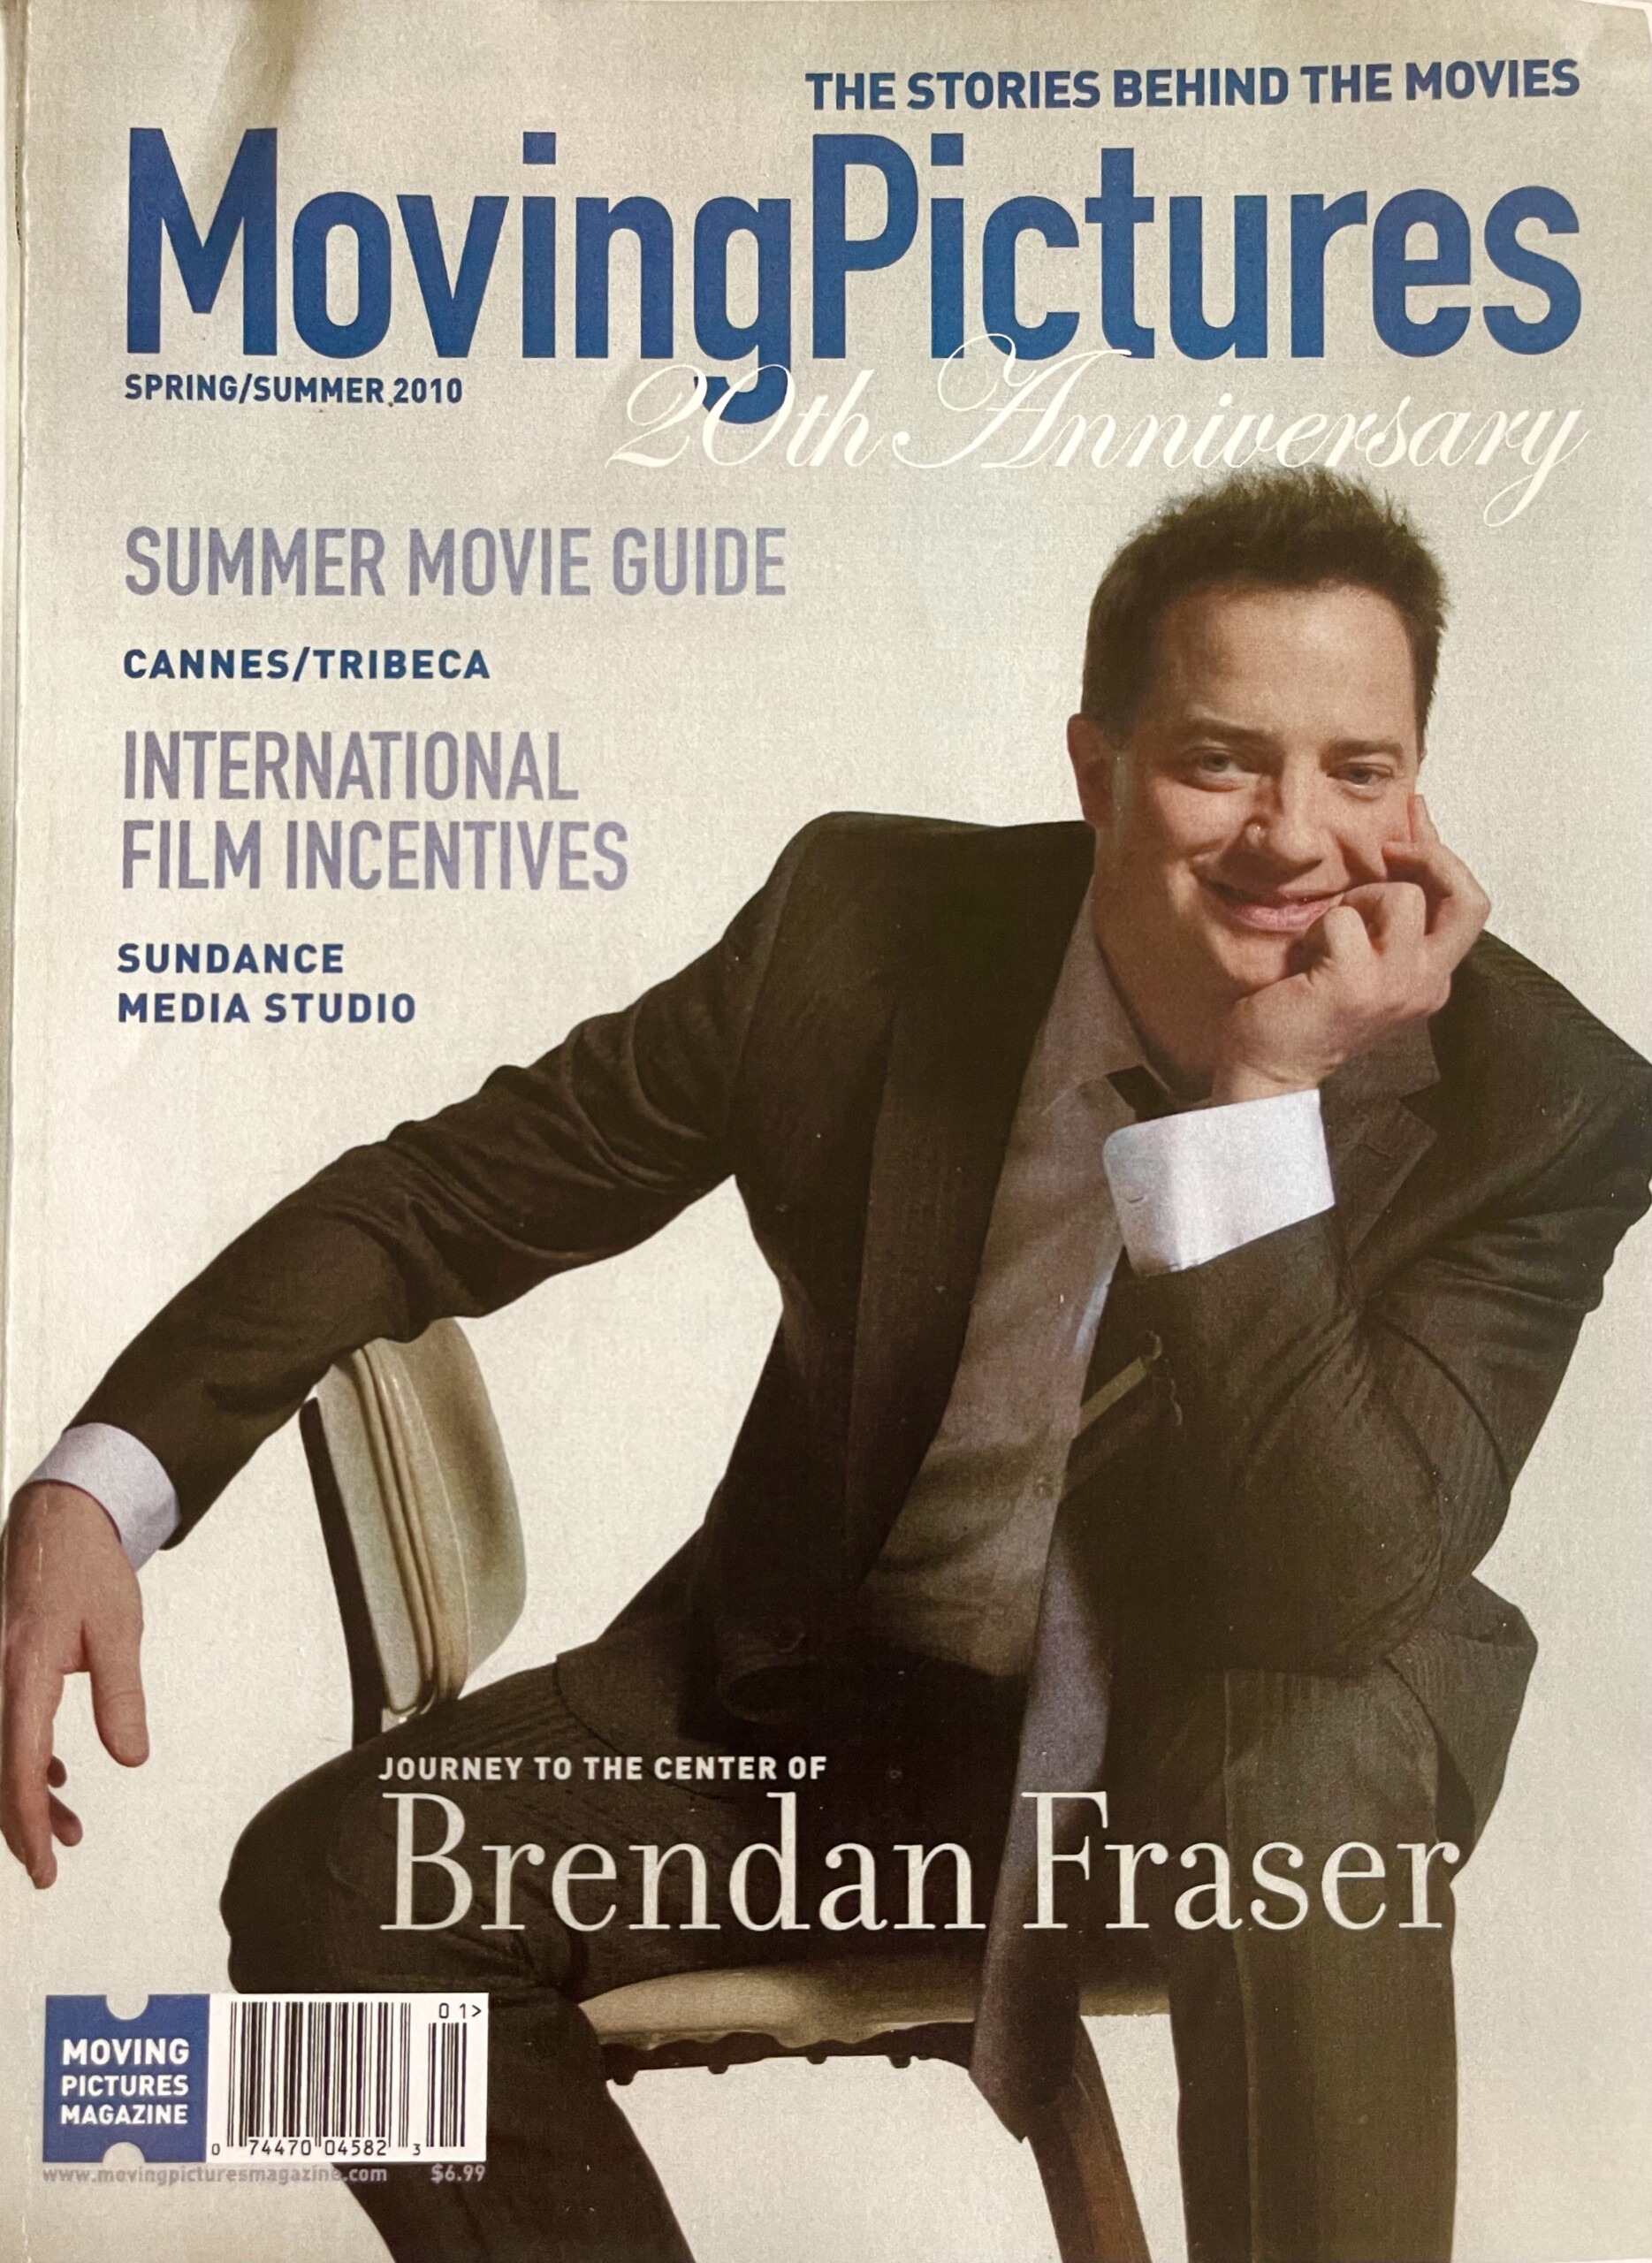 Brendan Fraser speaks with journalist Deborah Wilker, Moving Pictures magazine, summer 2010